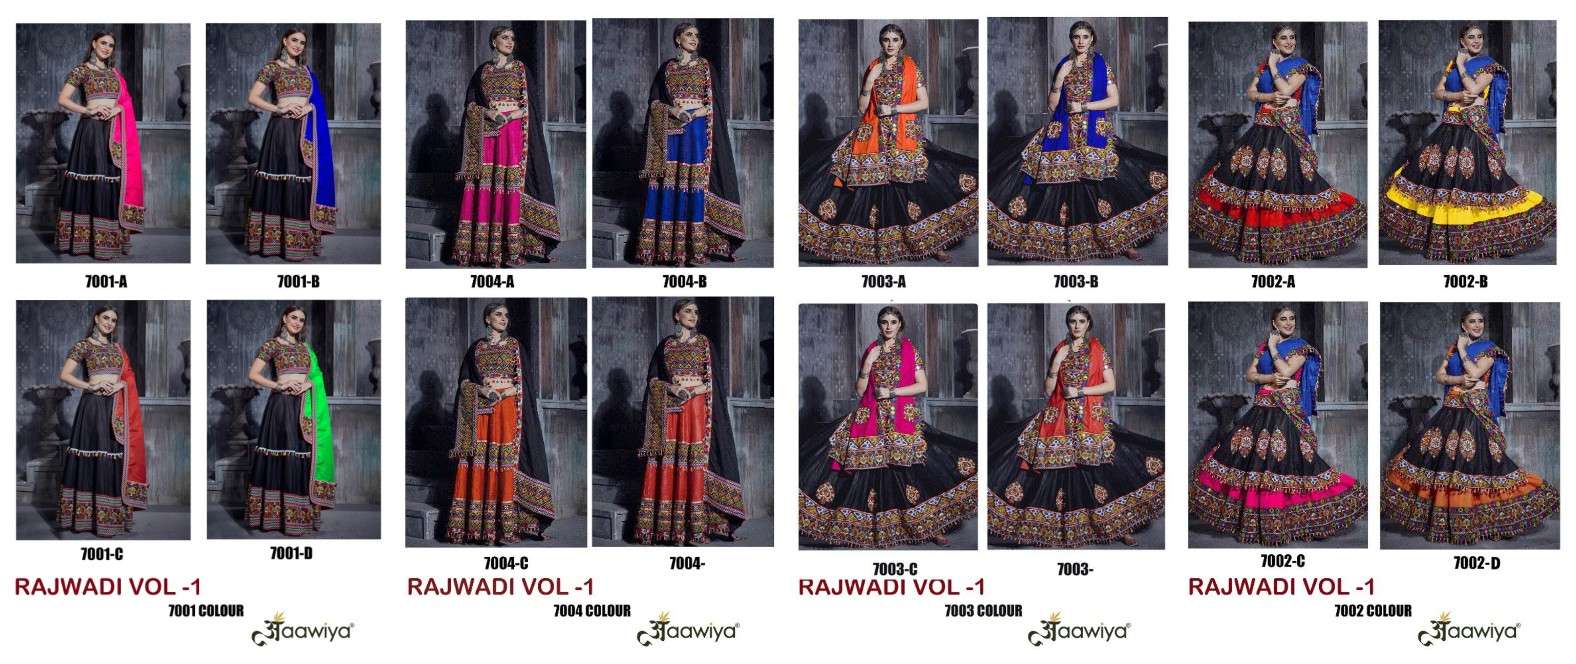 Rajwadi Vol -1 Navratri Lehenga Collection Anantexports